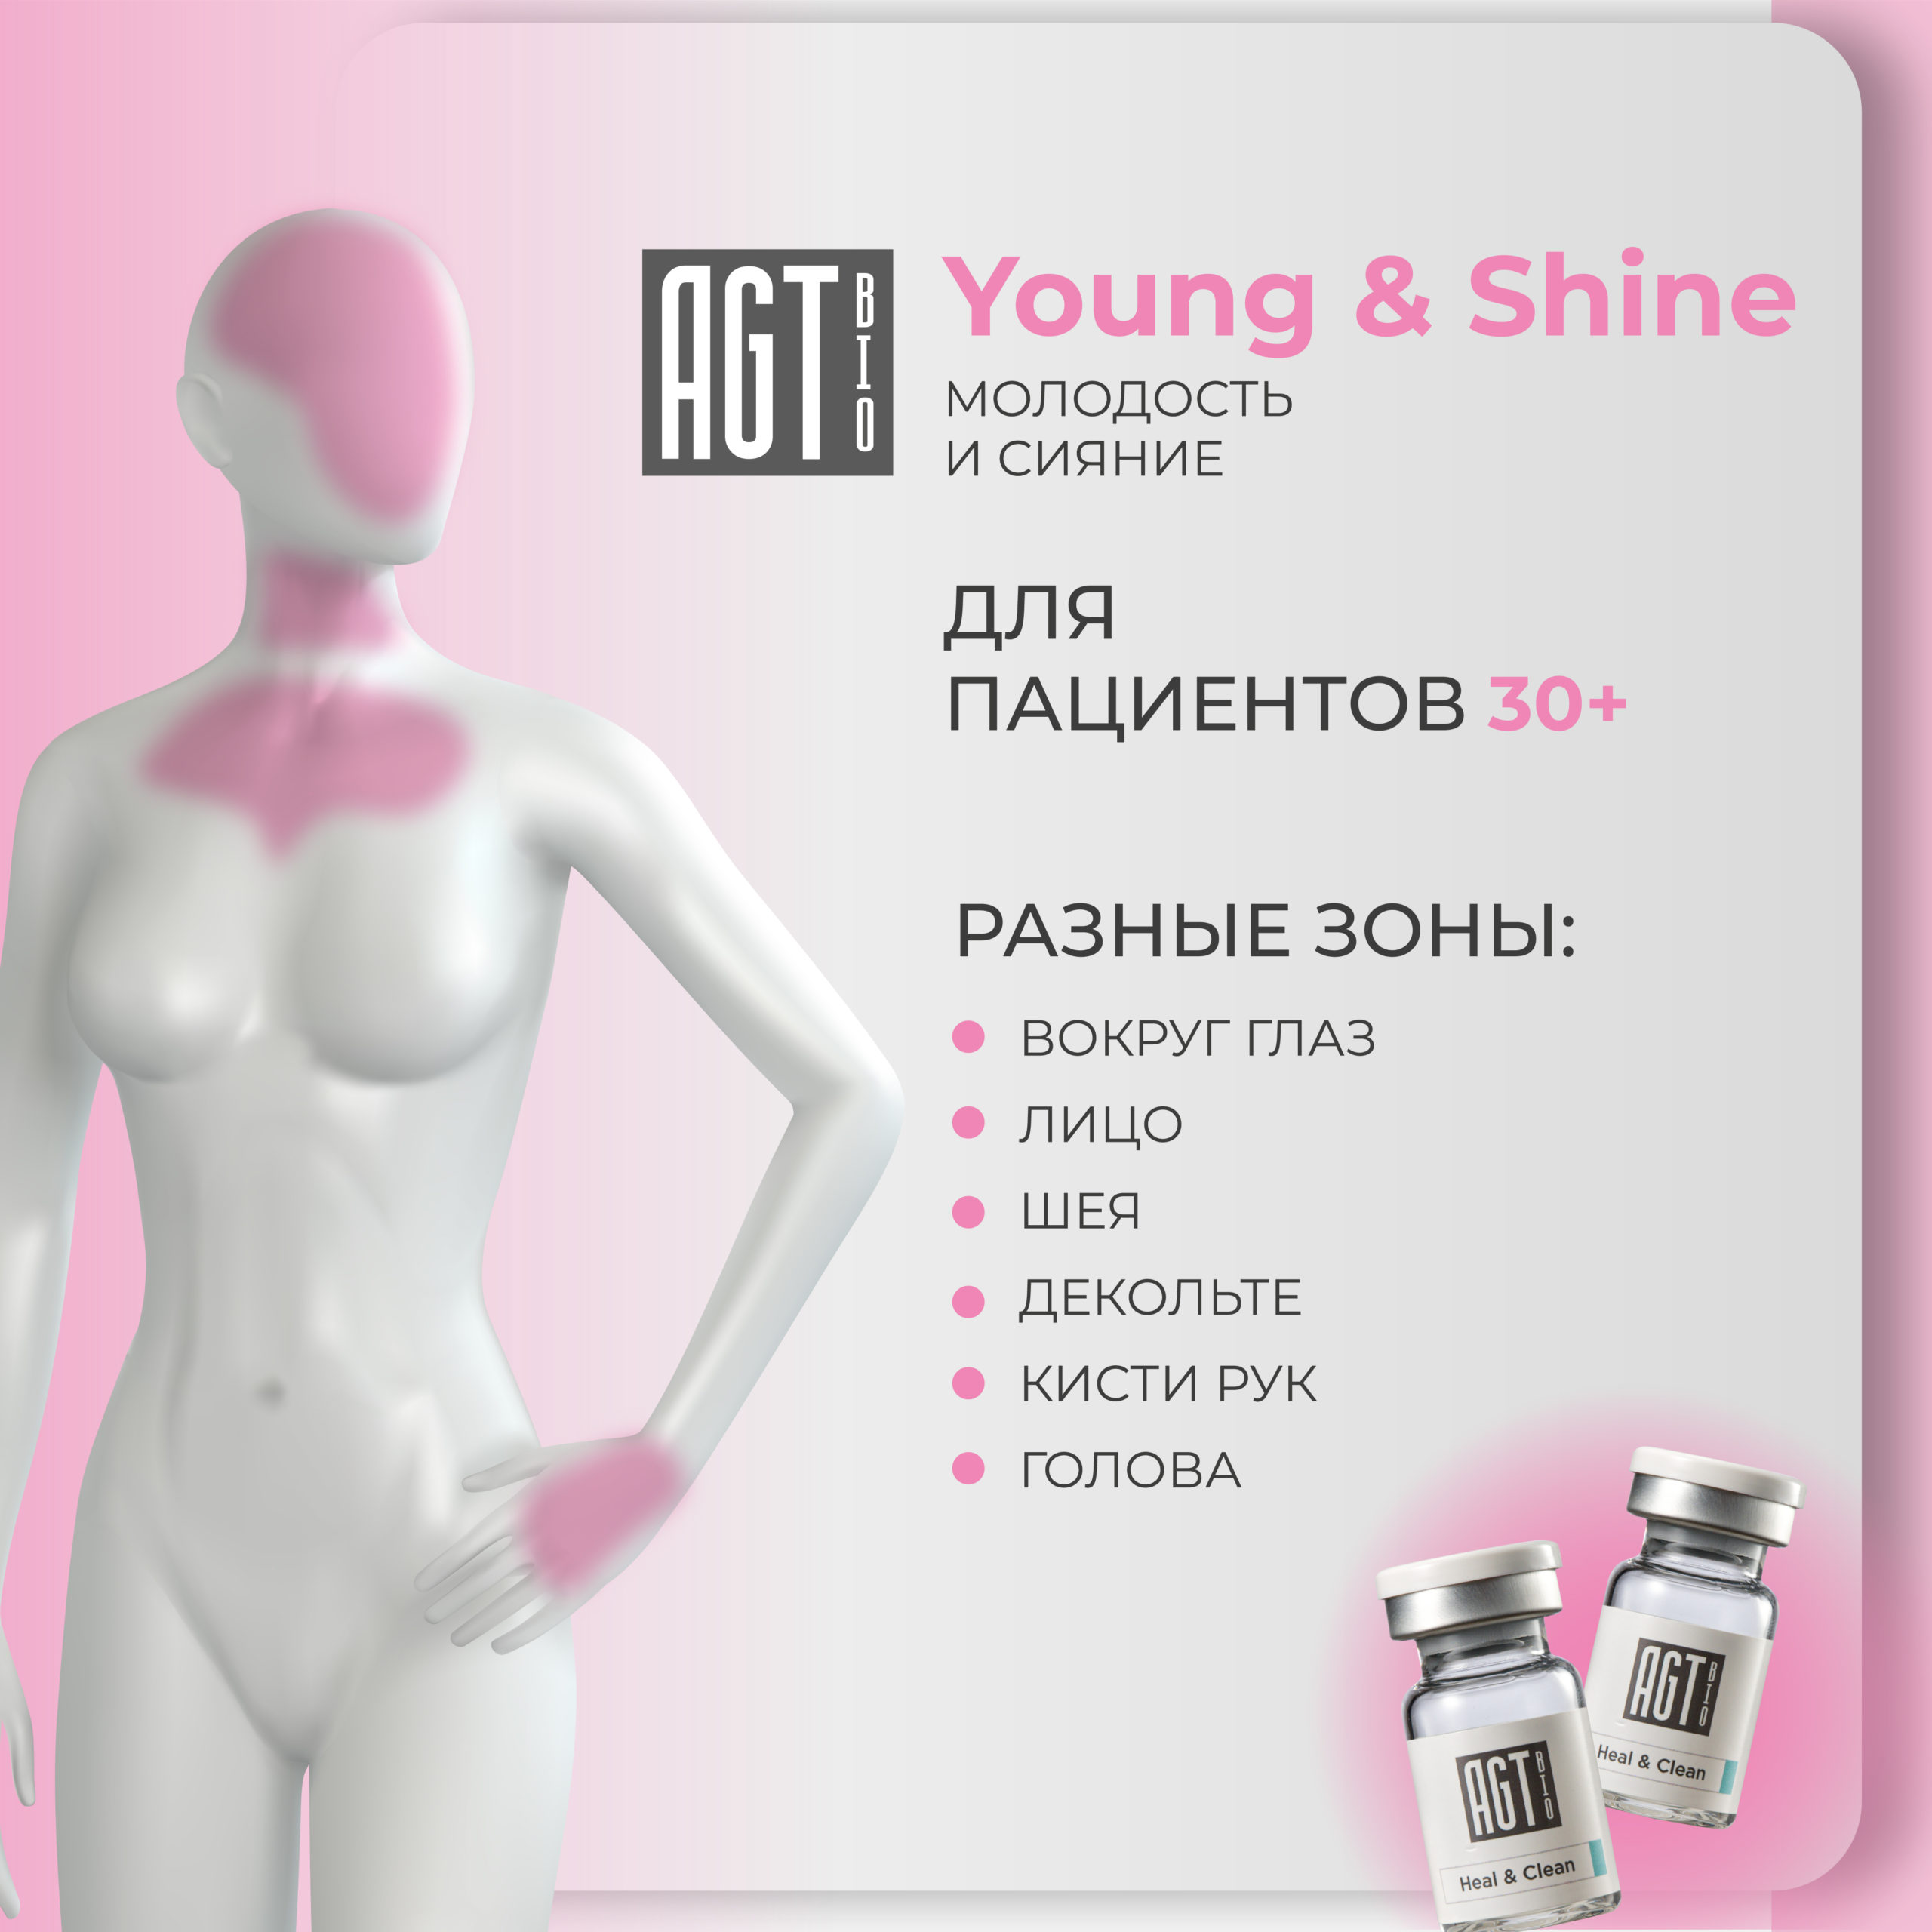 rich контент agt bio_young & shine 2